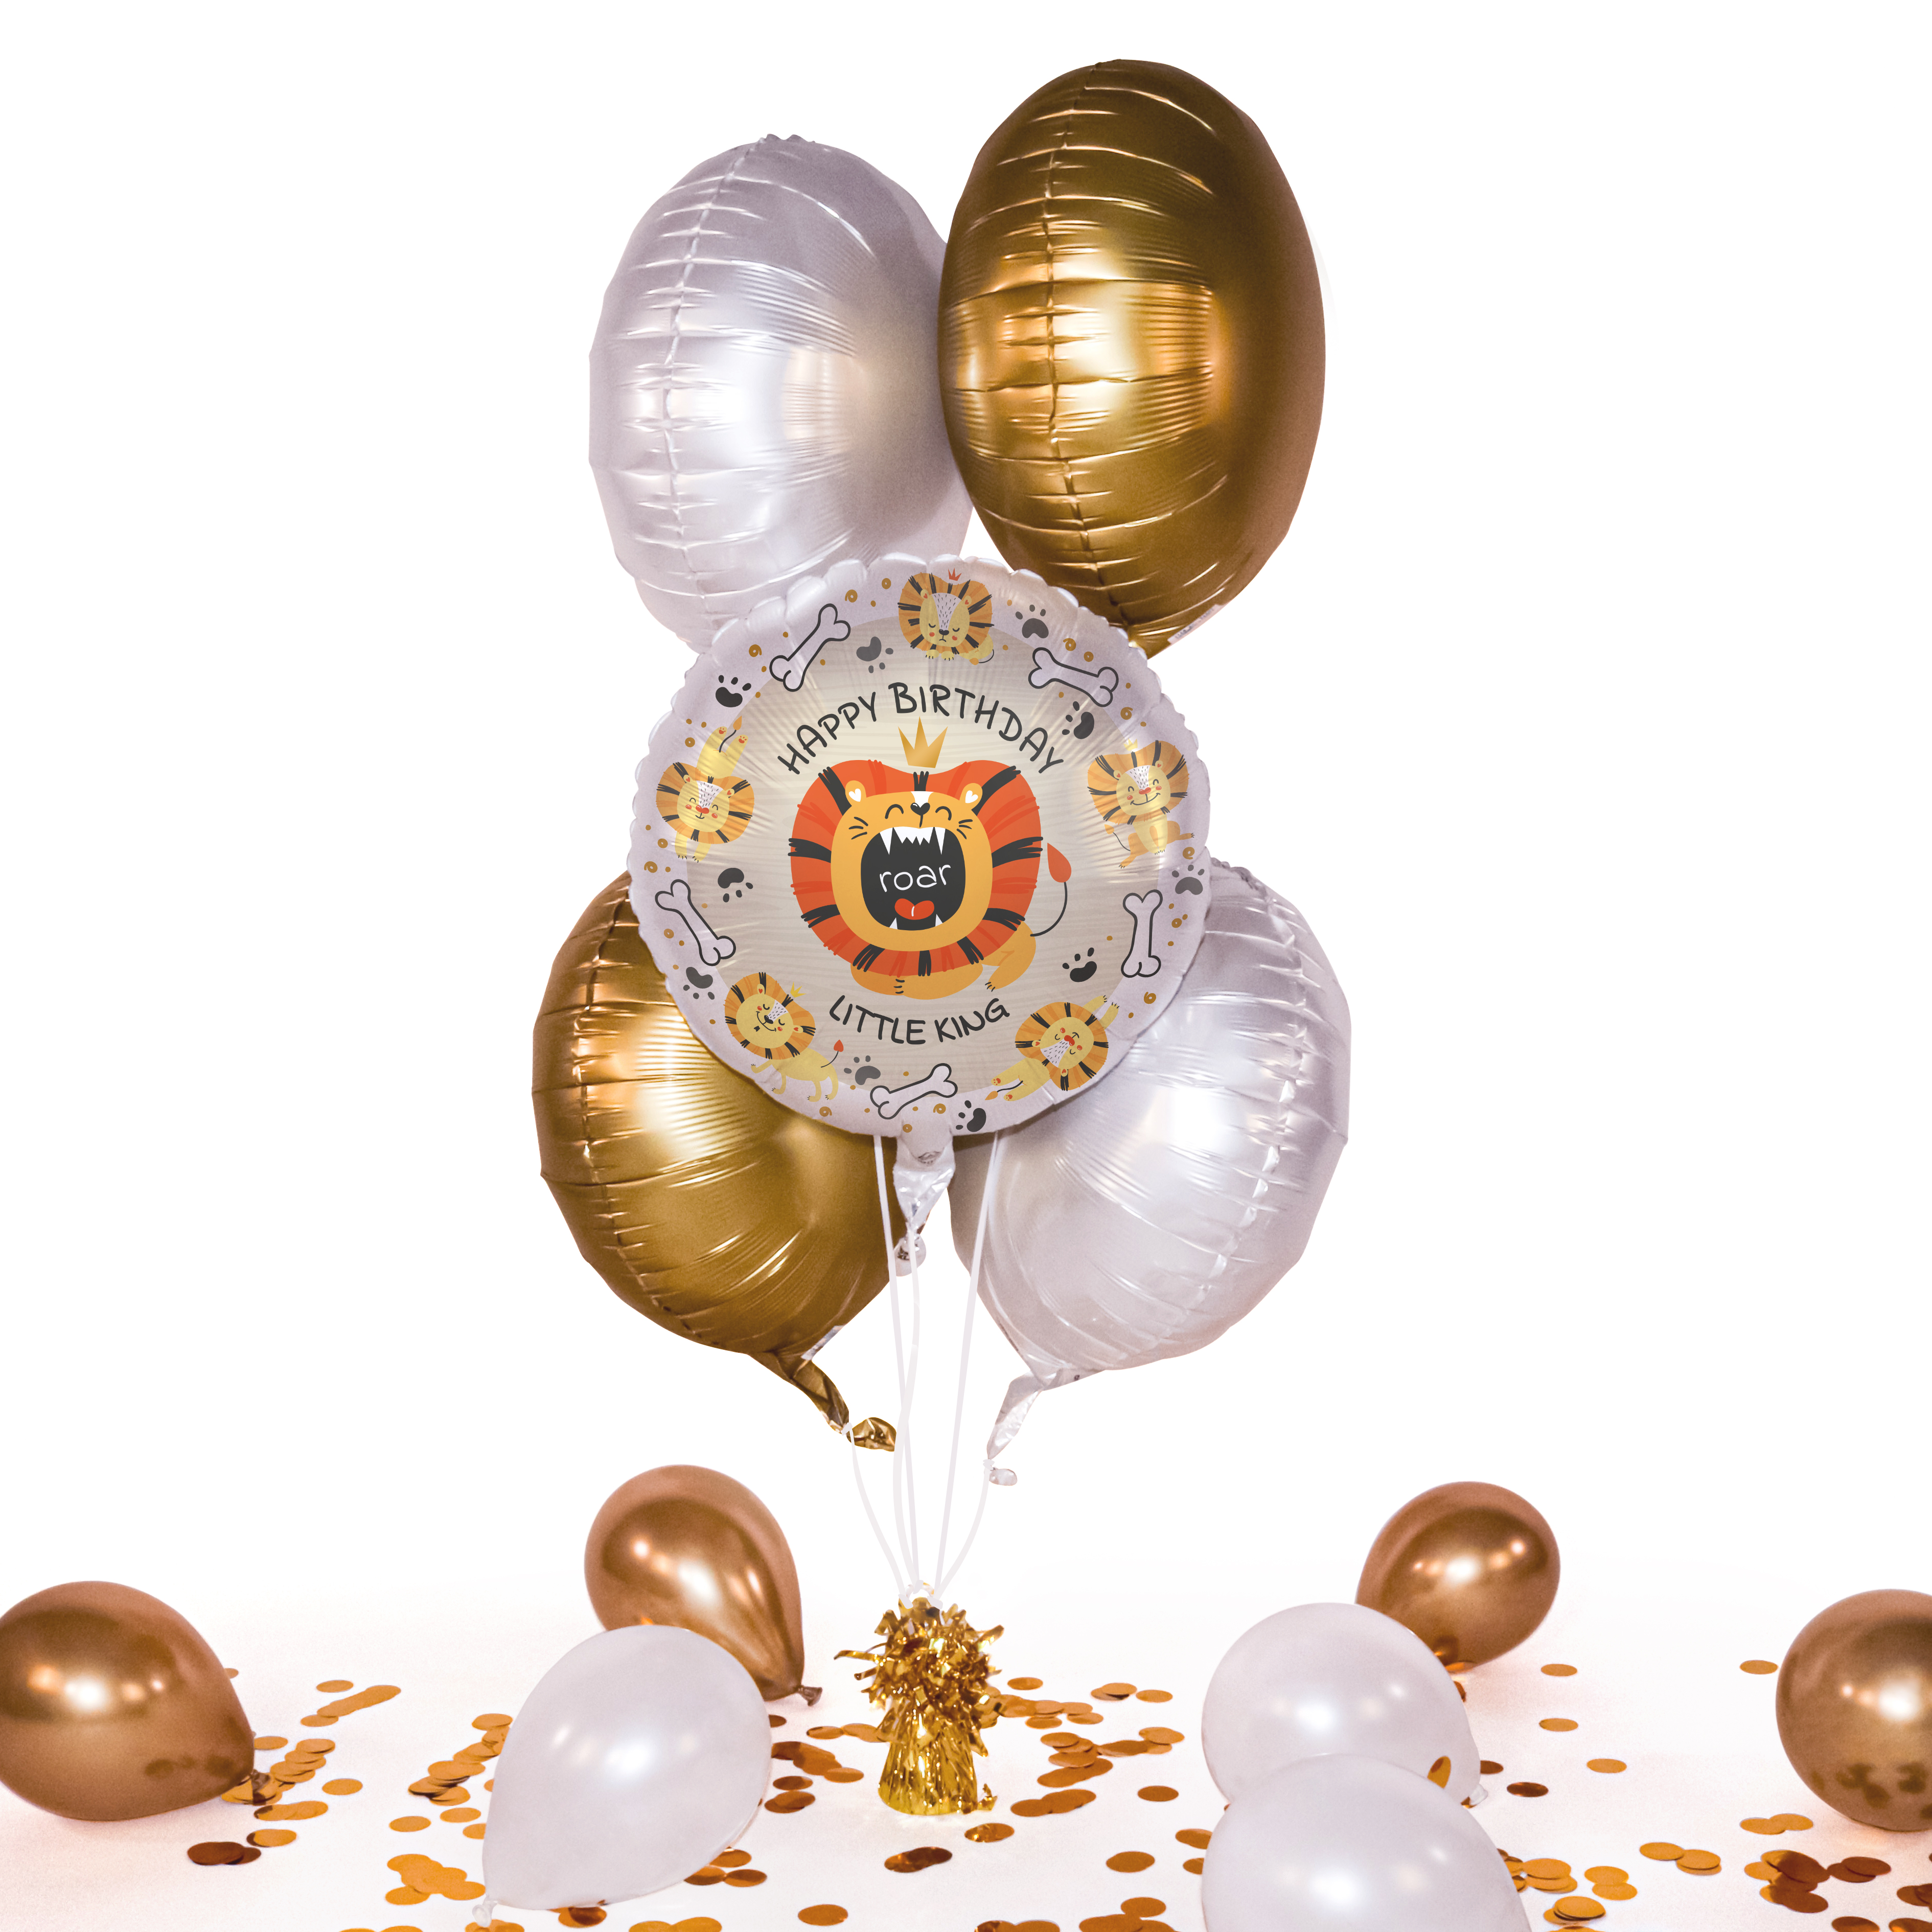 Heliumballon in a Box - Lion Guard Birthday